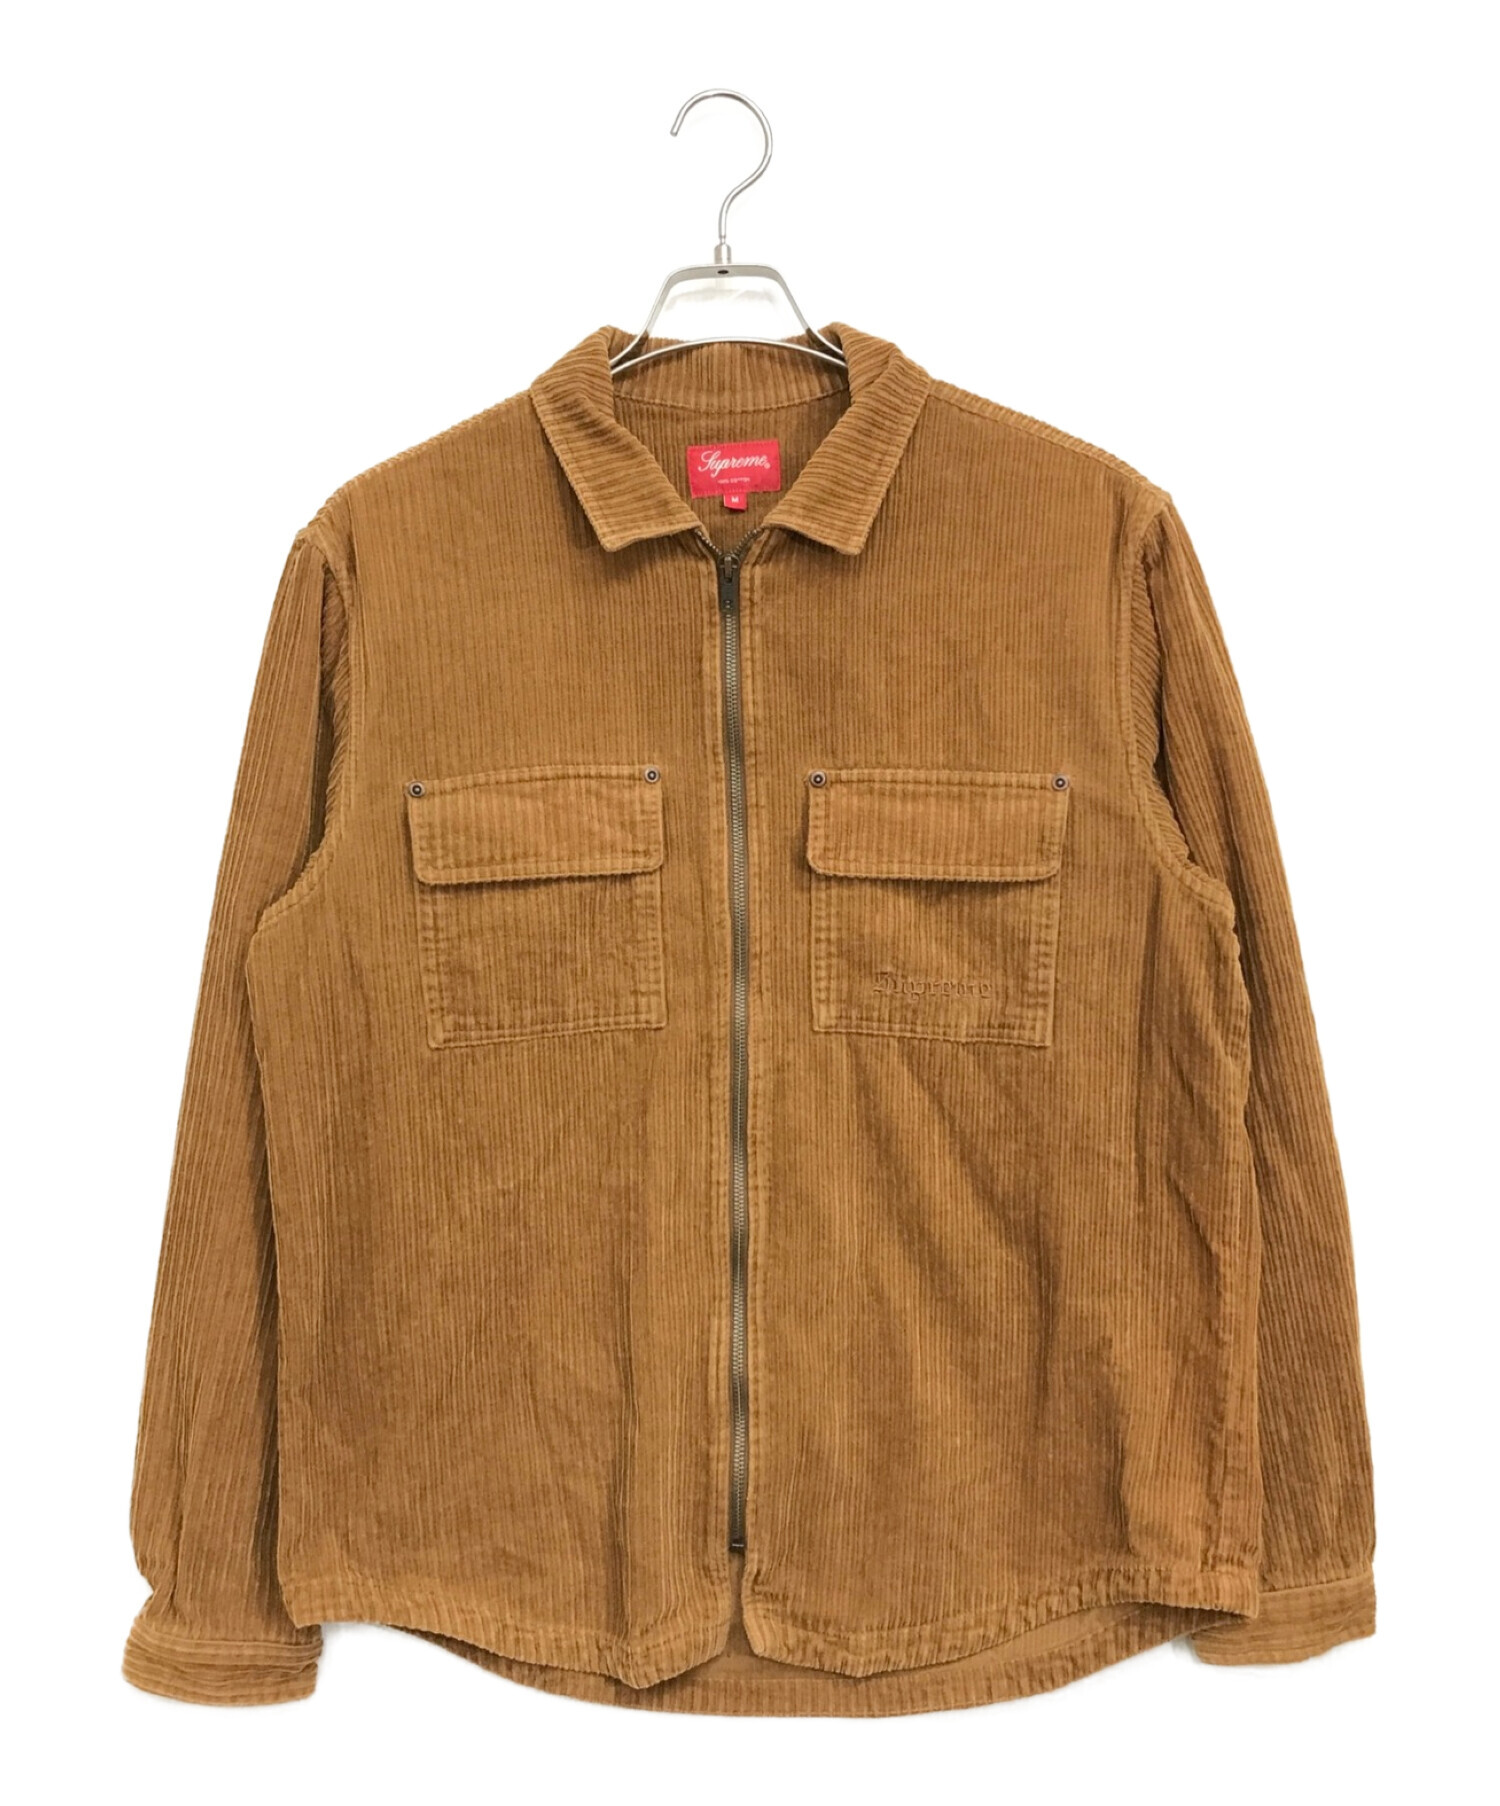 SUPREME (シュプリーム) コーデュロイジップシャツ 17AW Corduroy Zip Up Shirt ブラウン サイズ:M